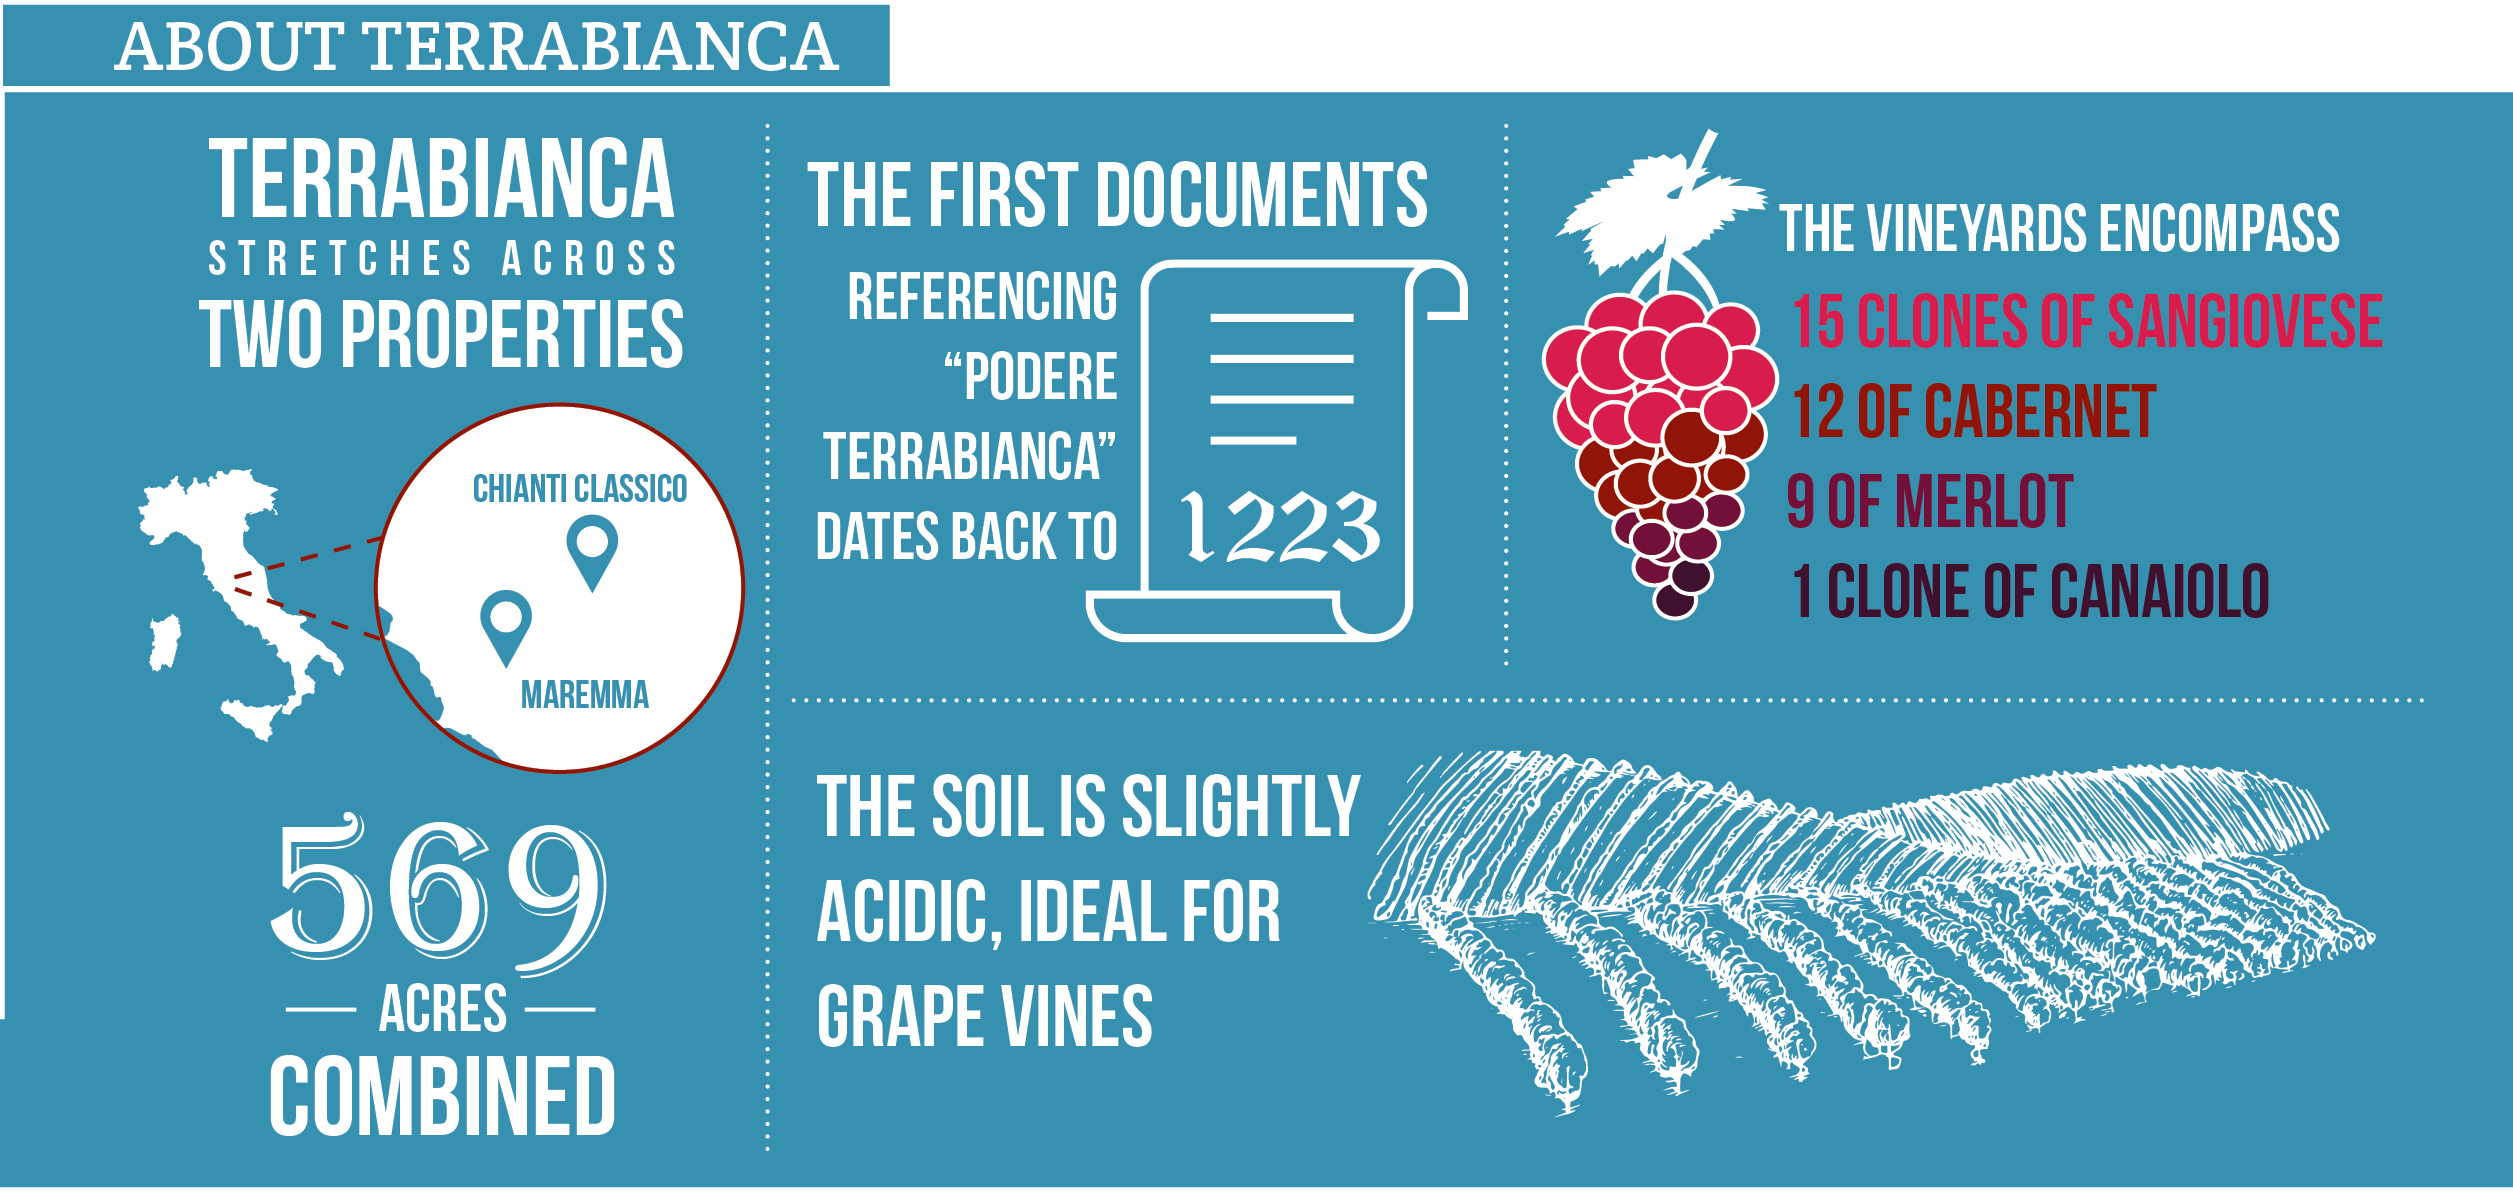 Terrabianca infographic